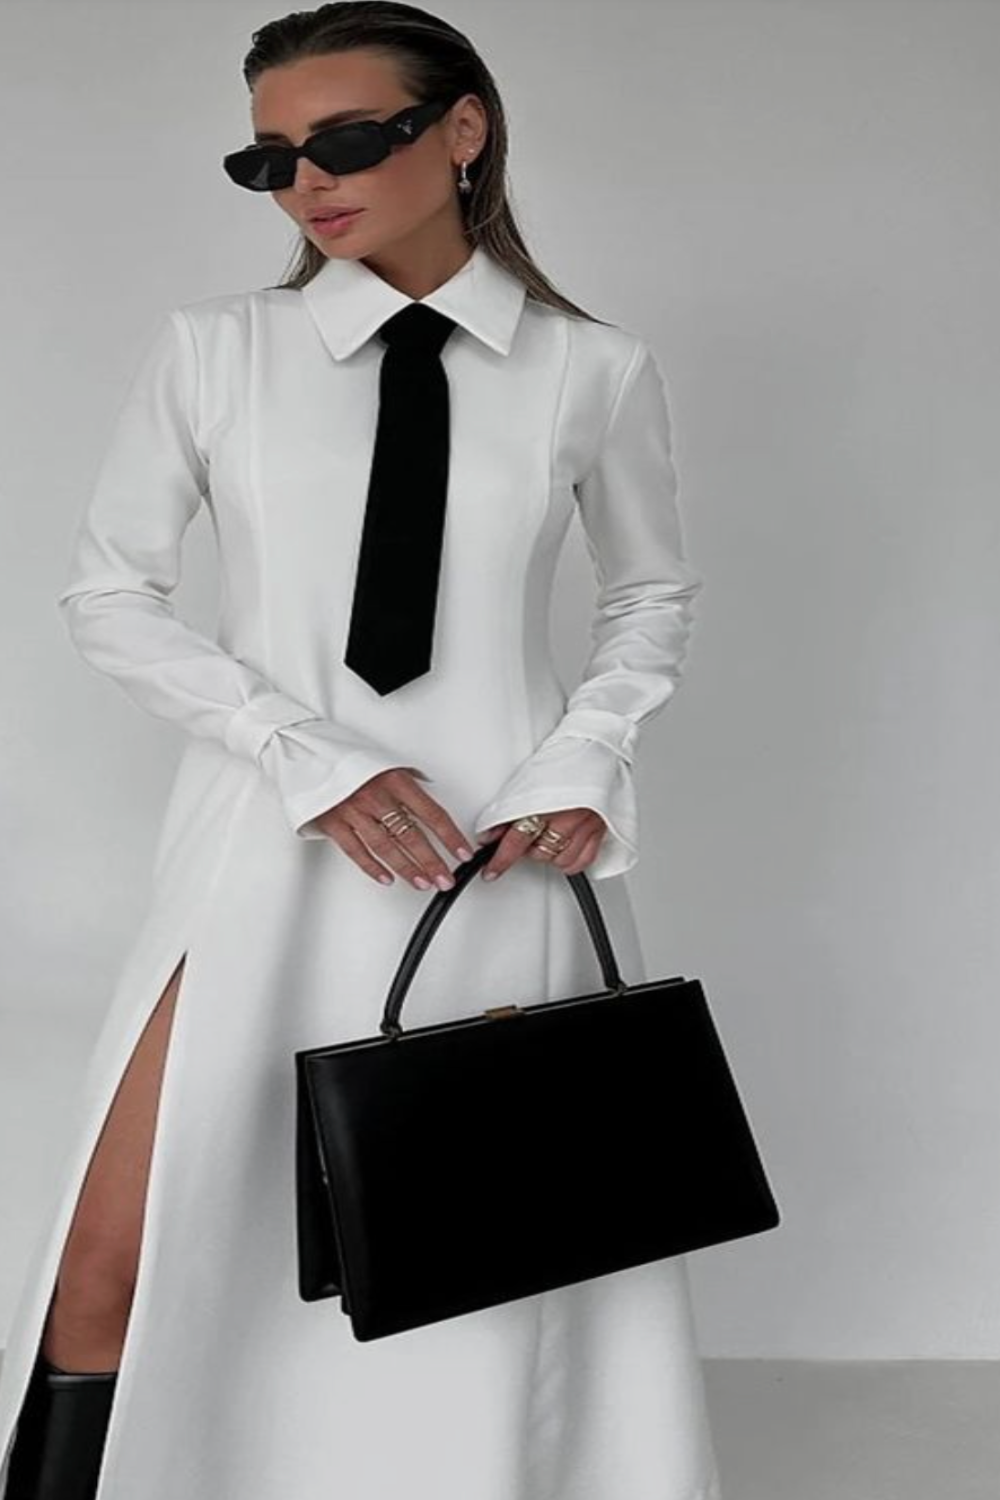 CAVIAR SLIM DRESS - WHITE